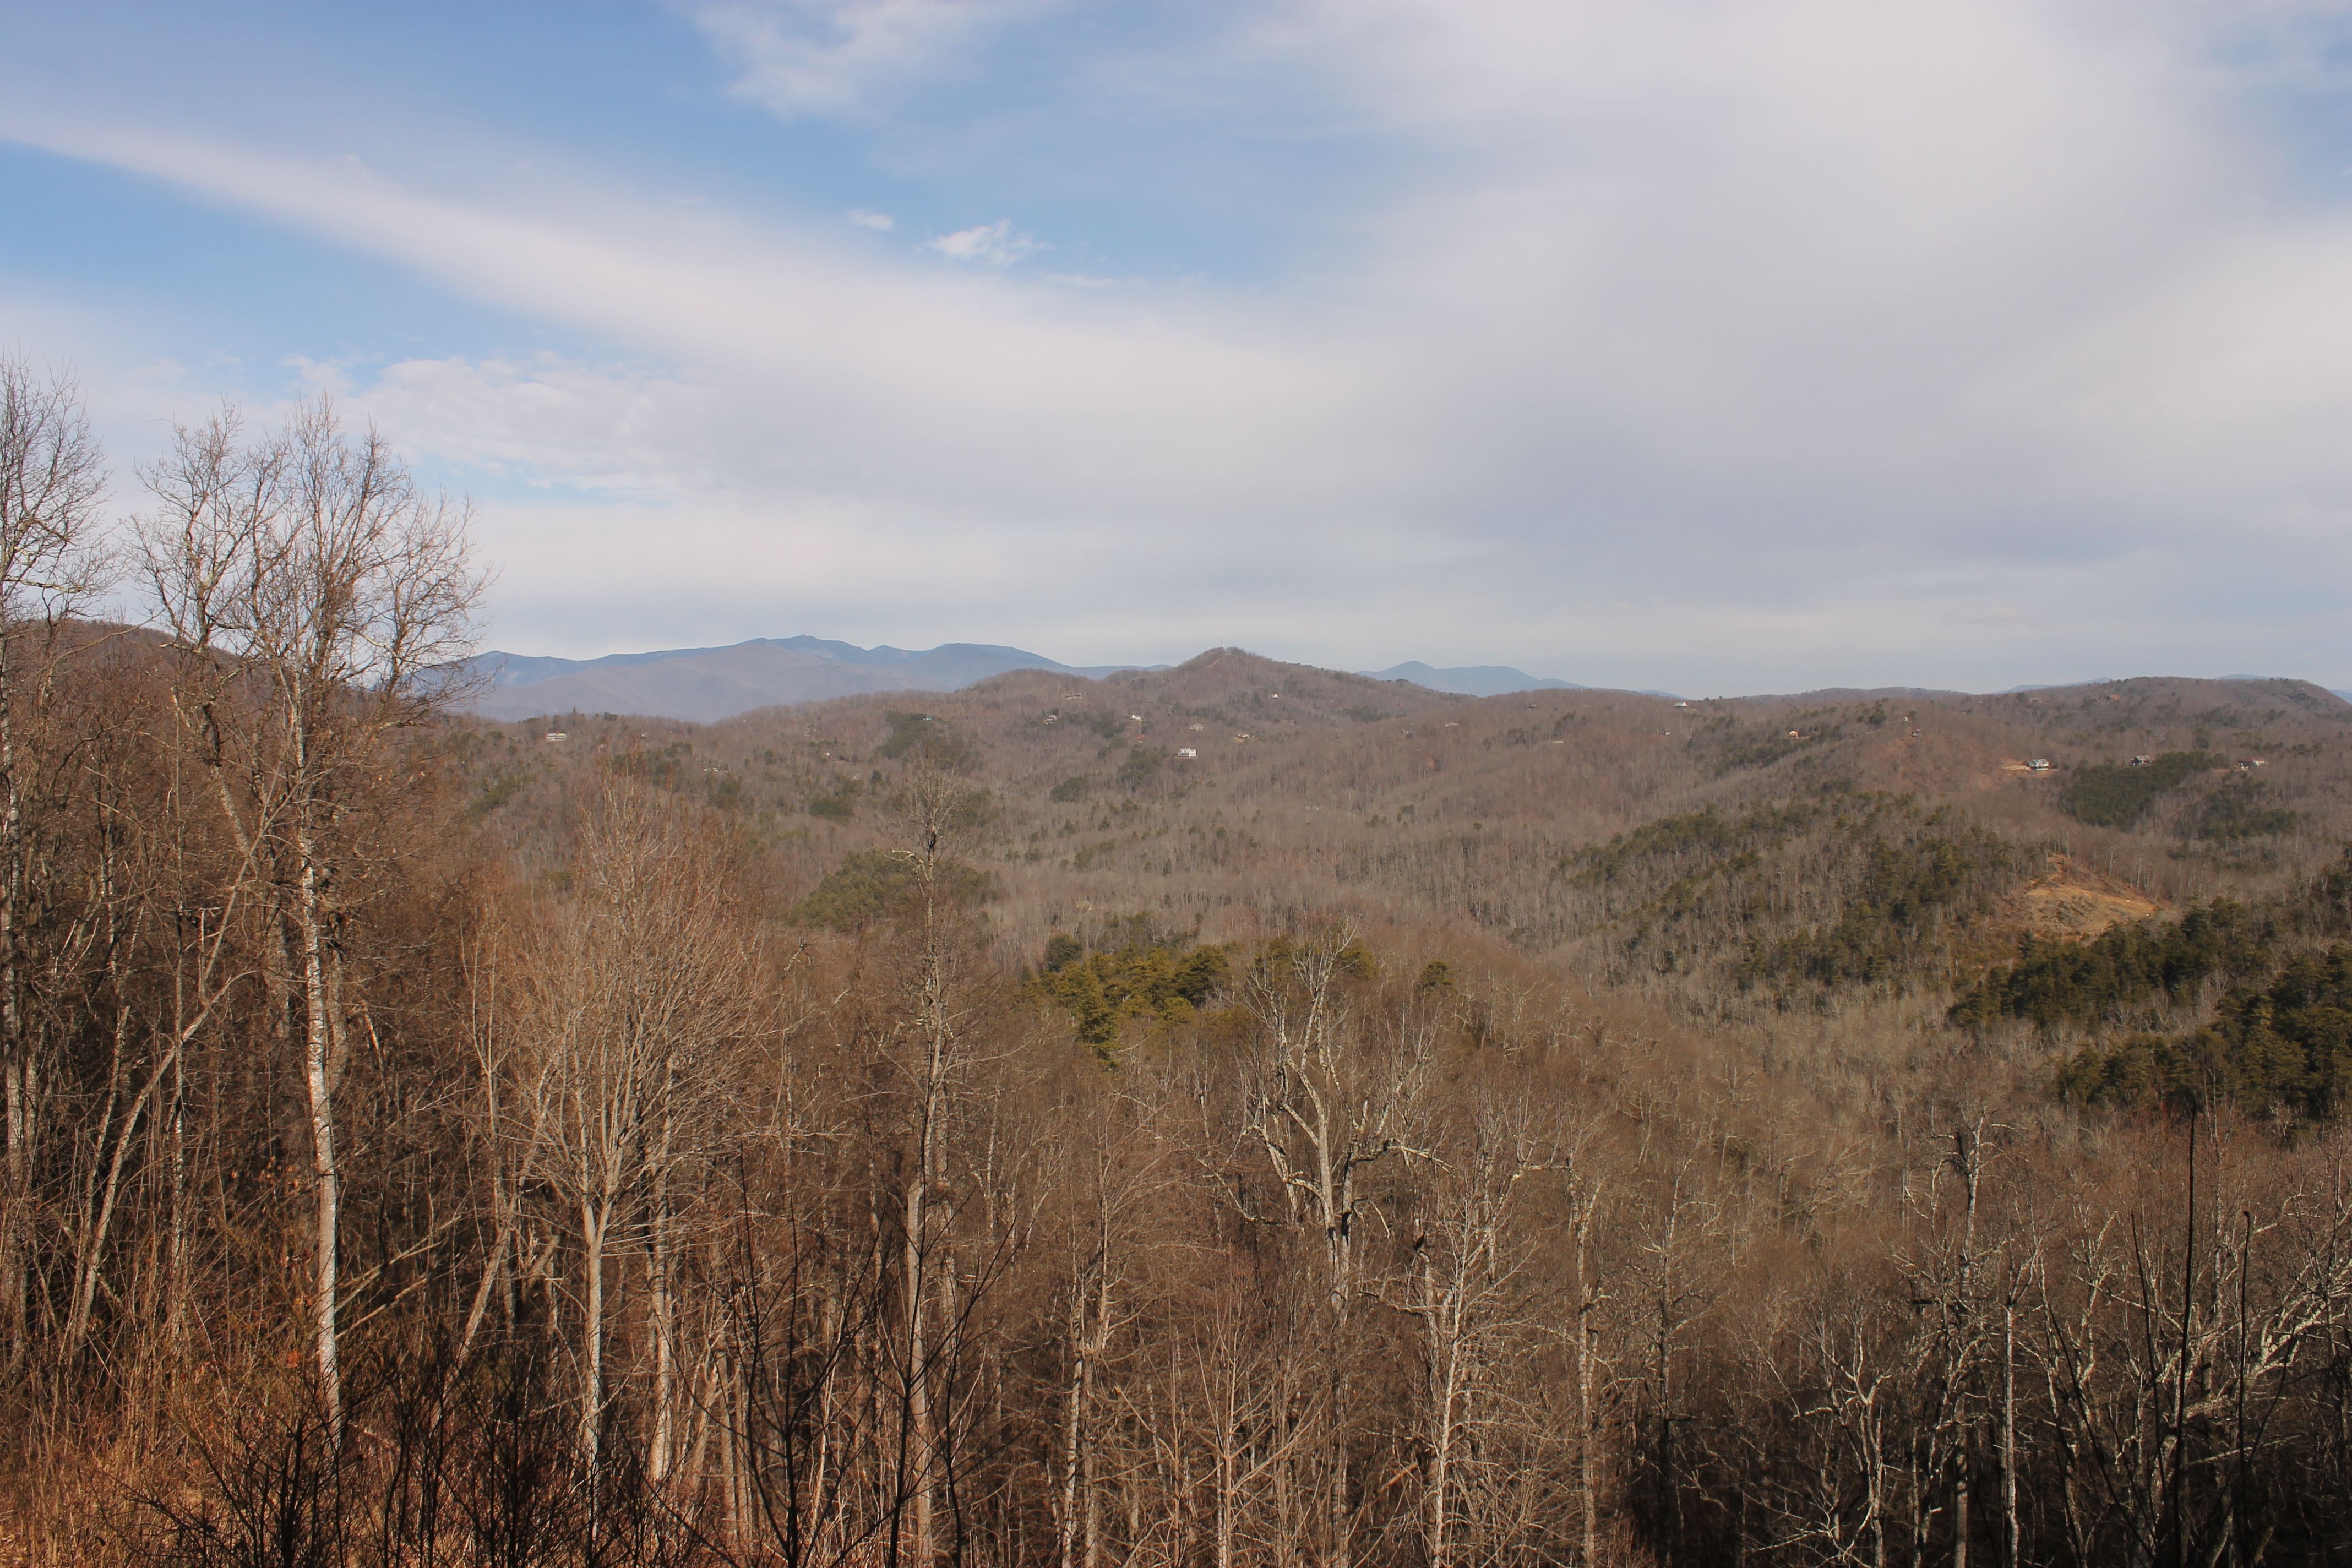 Houses dot the hillside near Black Mountain, North Carolina. Image by Emma Johnson. United States, 2020.